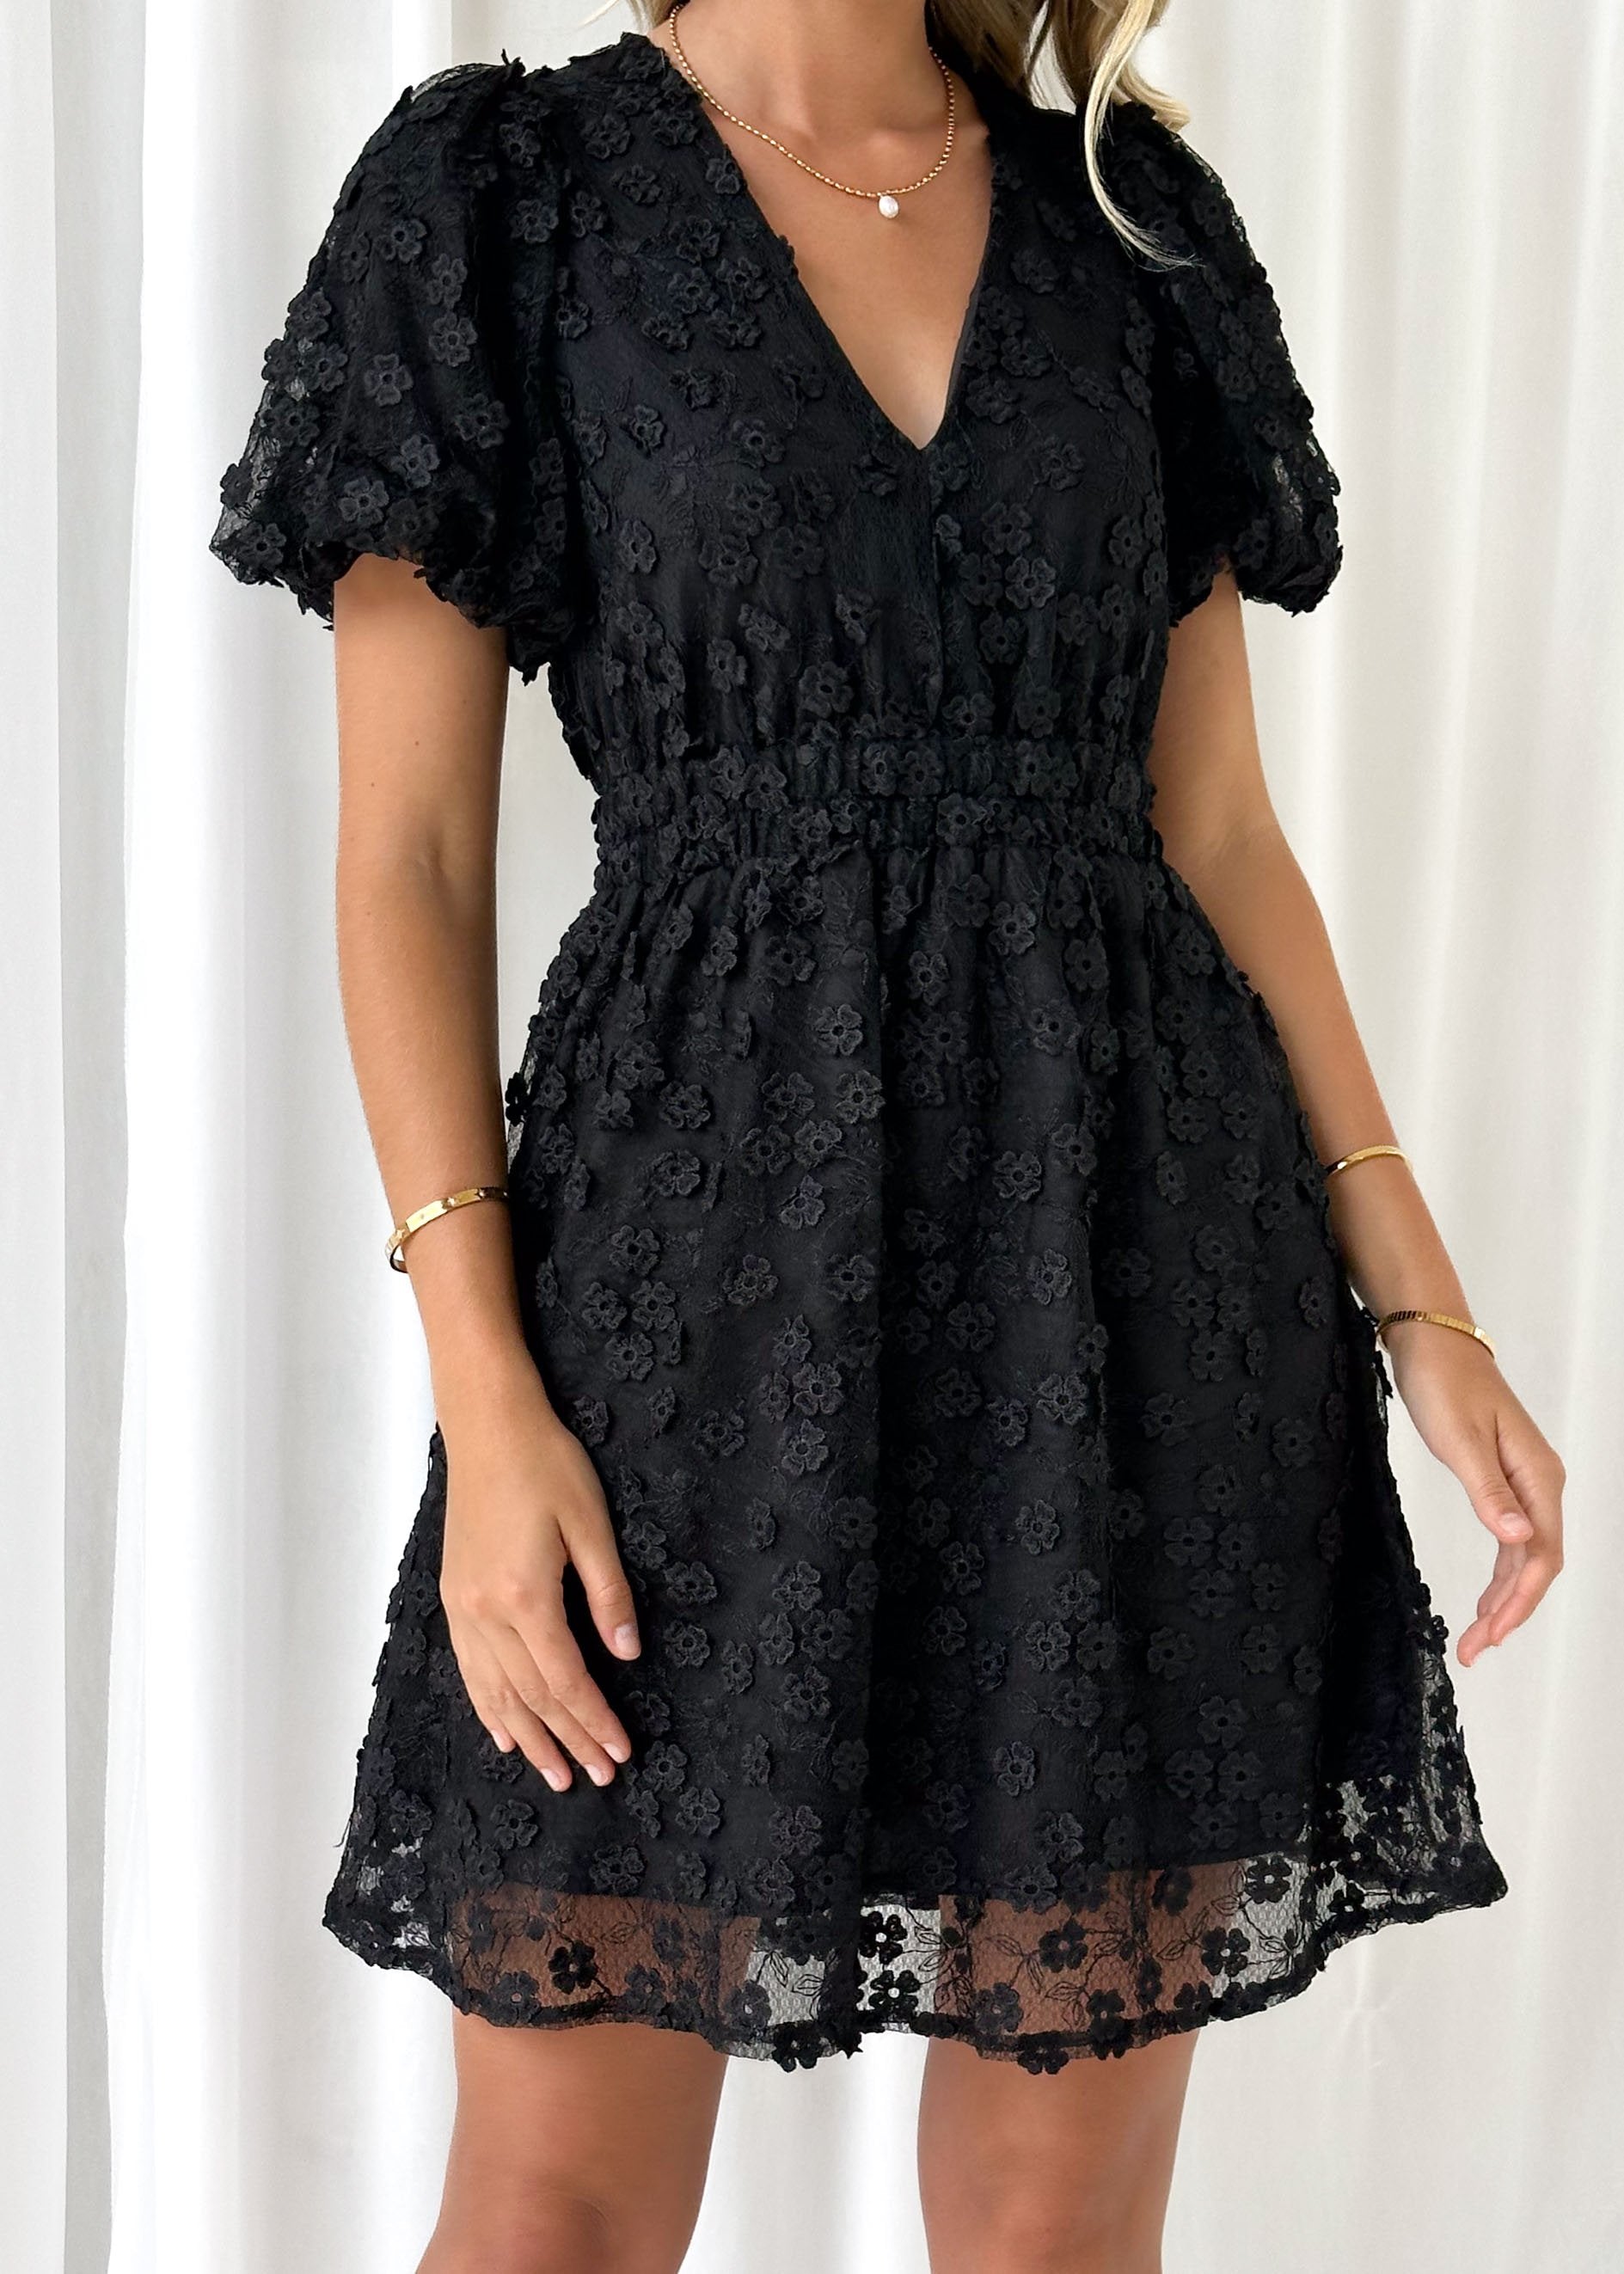 Falta Embroidered Dress - Black